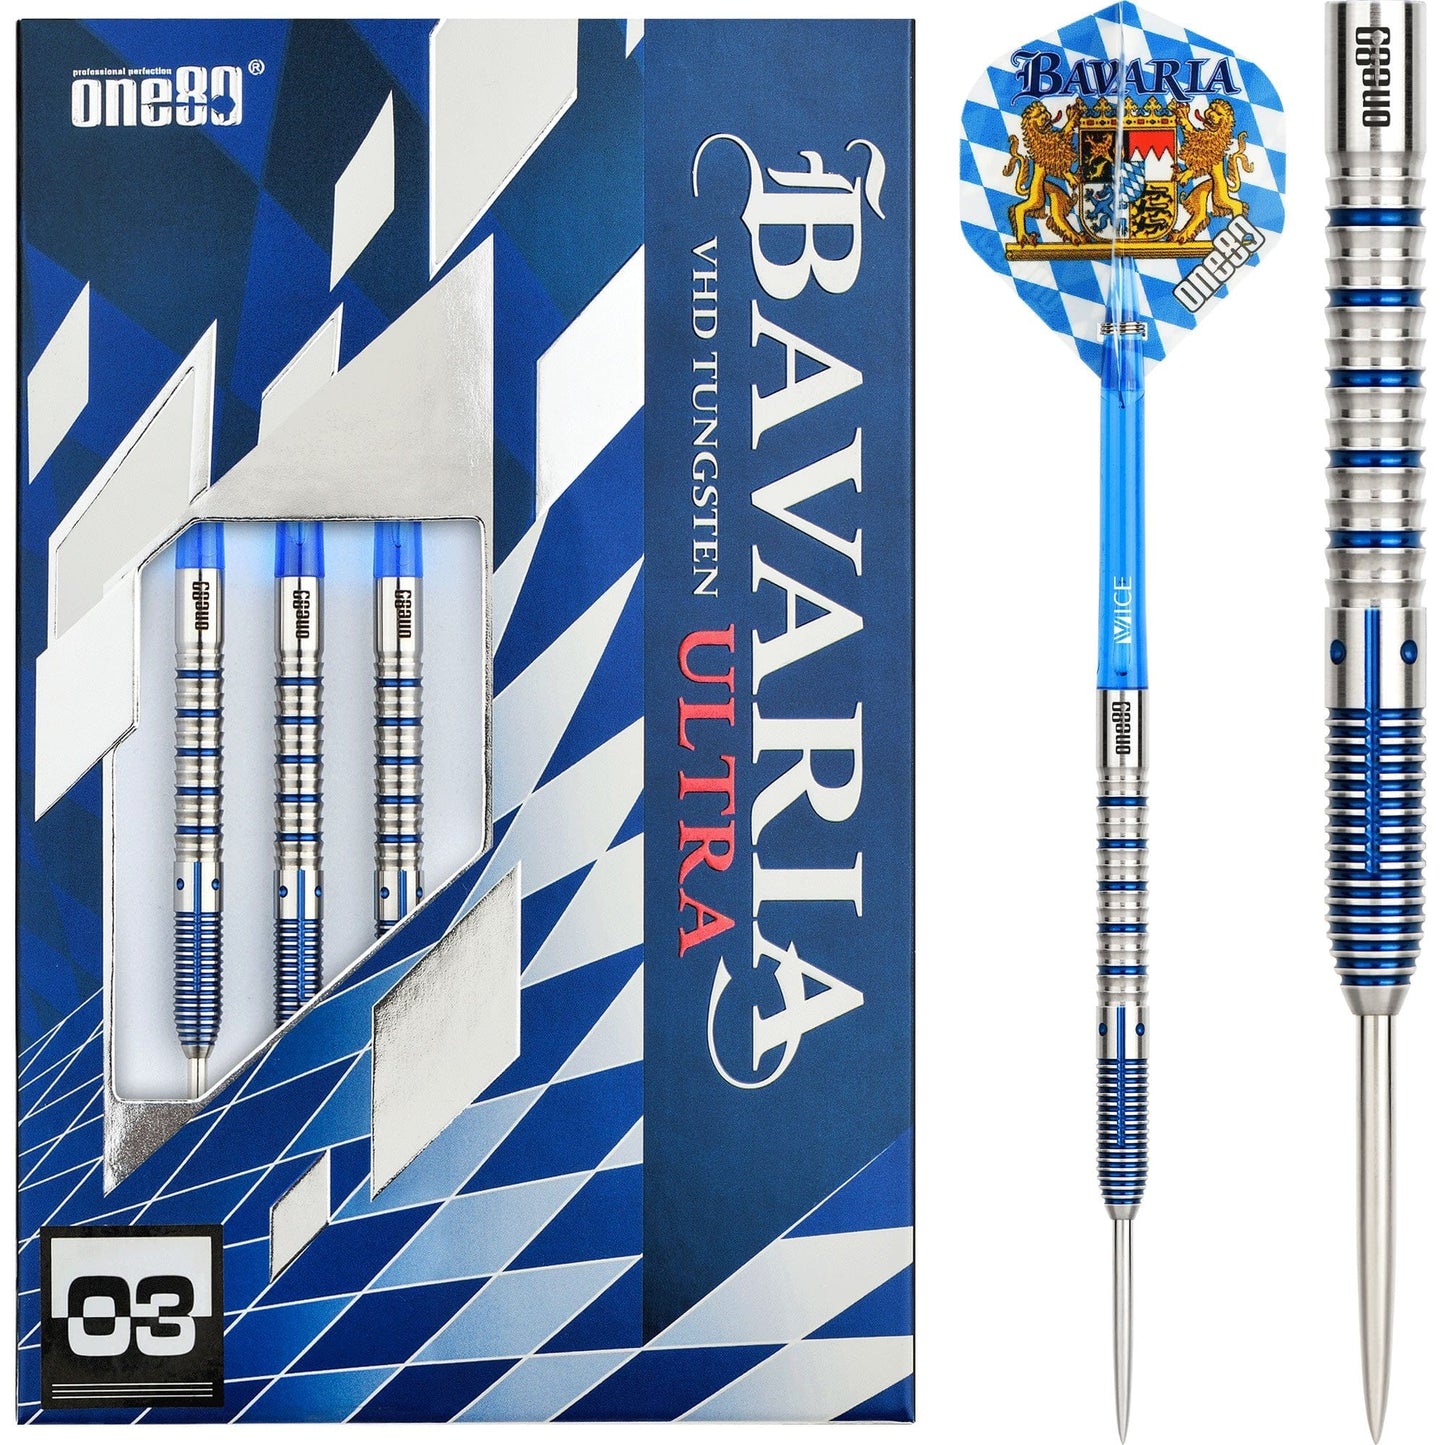 One80 Bavaria Ultra Long Darts - Steel Tip - S03 - Blue 21g